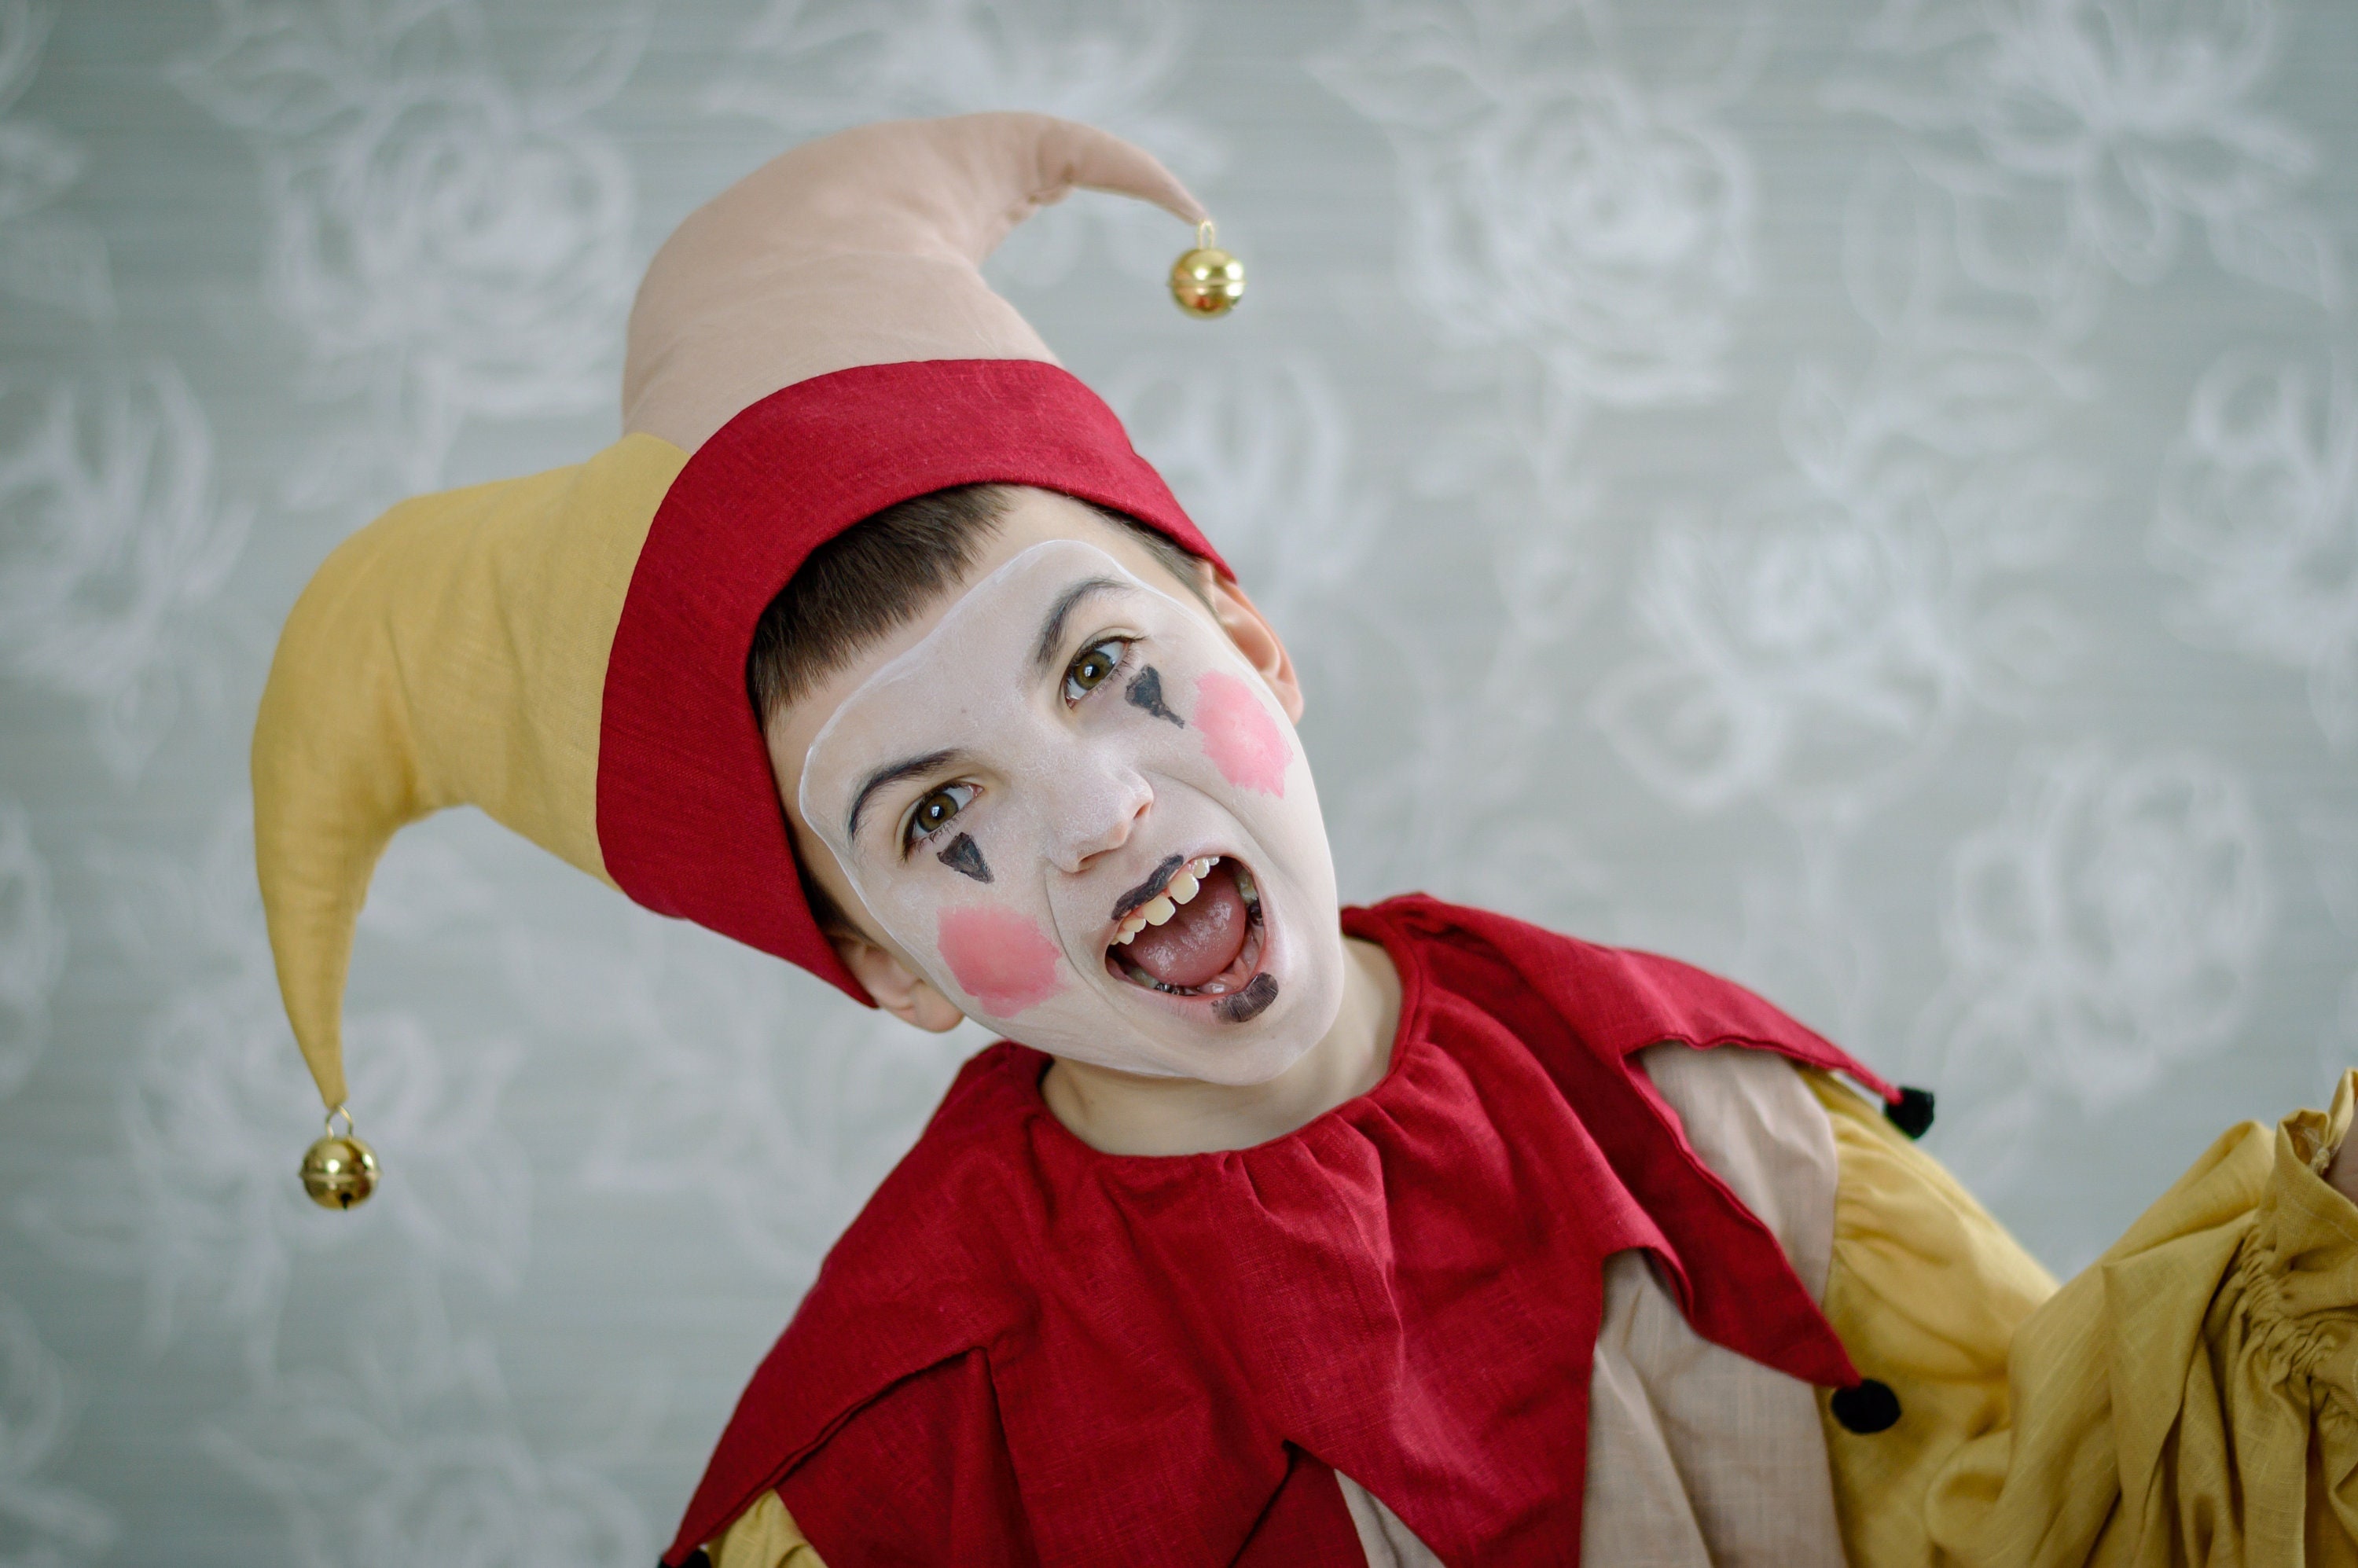 iZoeL Clown Kostüm Accessoire, Clown Lockenperücke + Clownsnase + Bunte  Krawatte + Handschuhe, Fasching Karneval Kostüme für Kinder Damen Herren